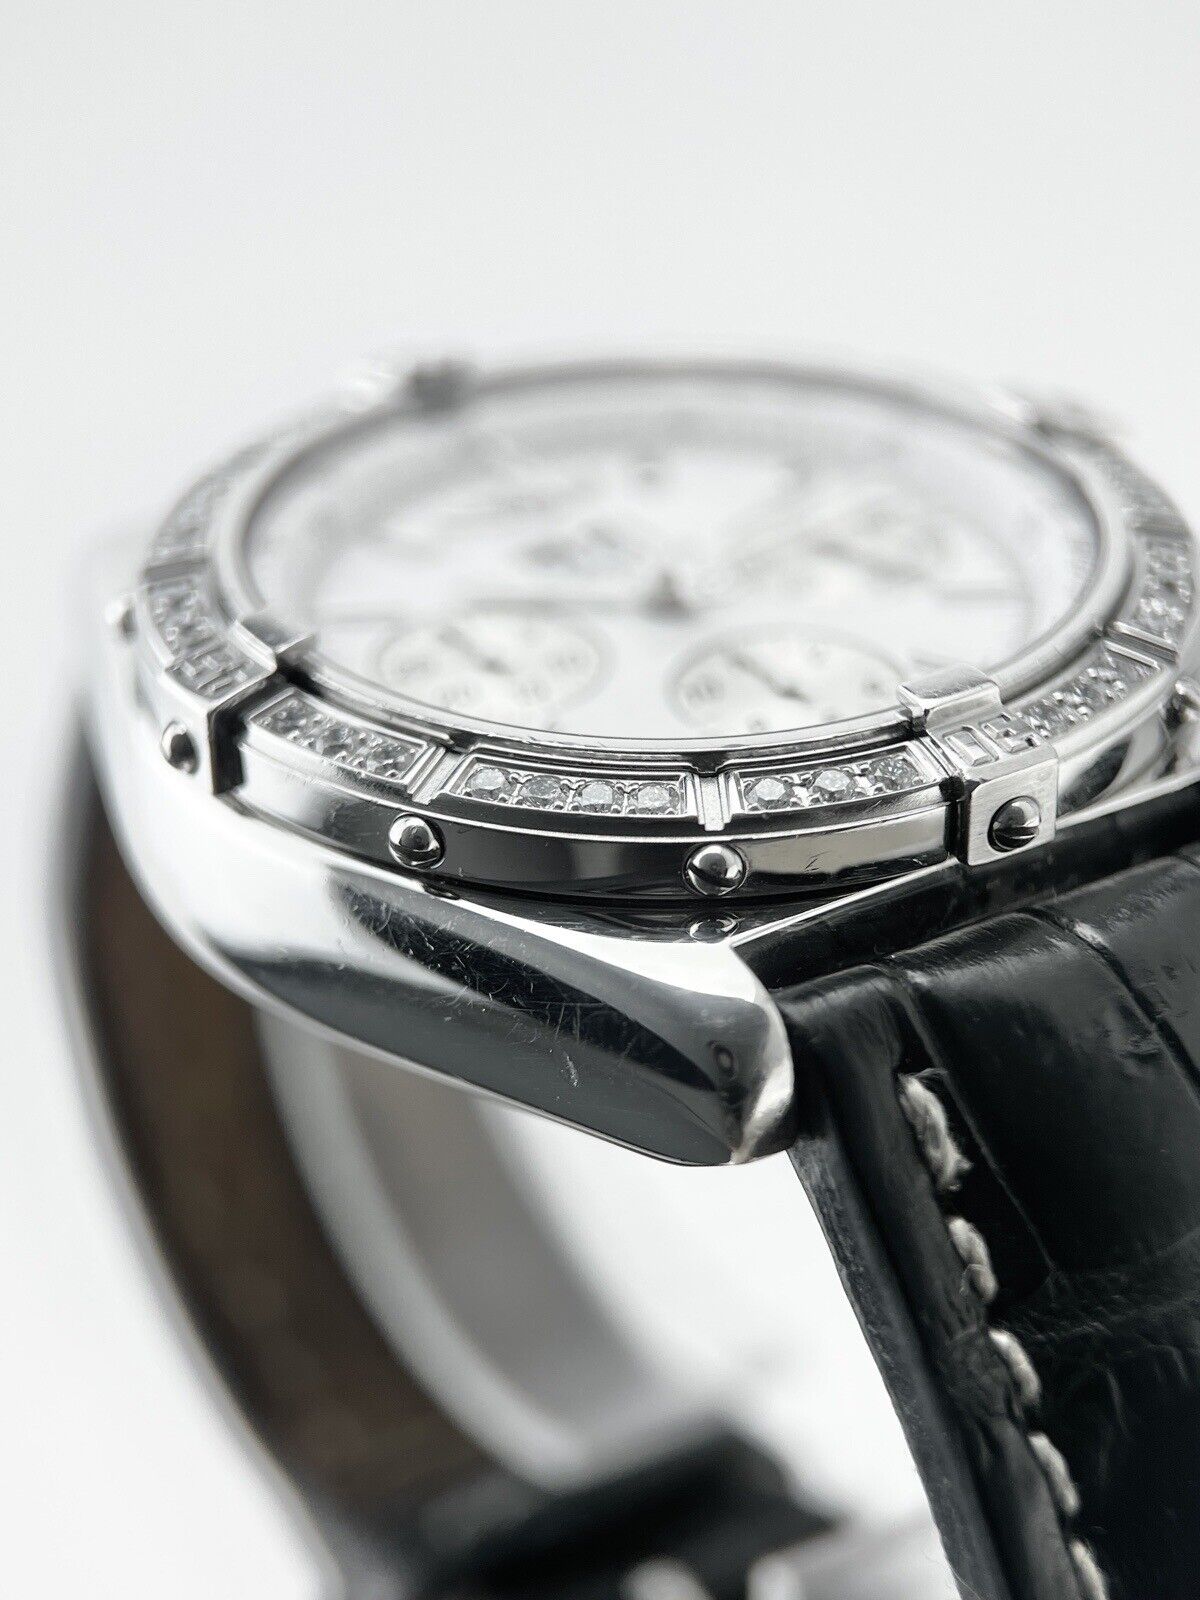 Breitling Crosswind Special 44mm Automatic Watch A44355 w/ Diamond Bezel